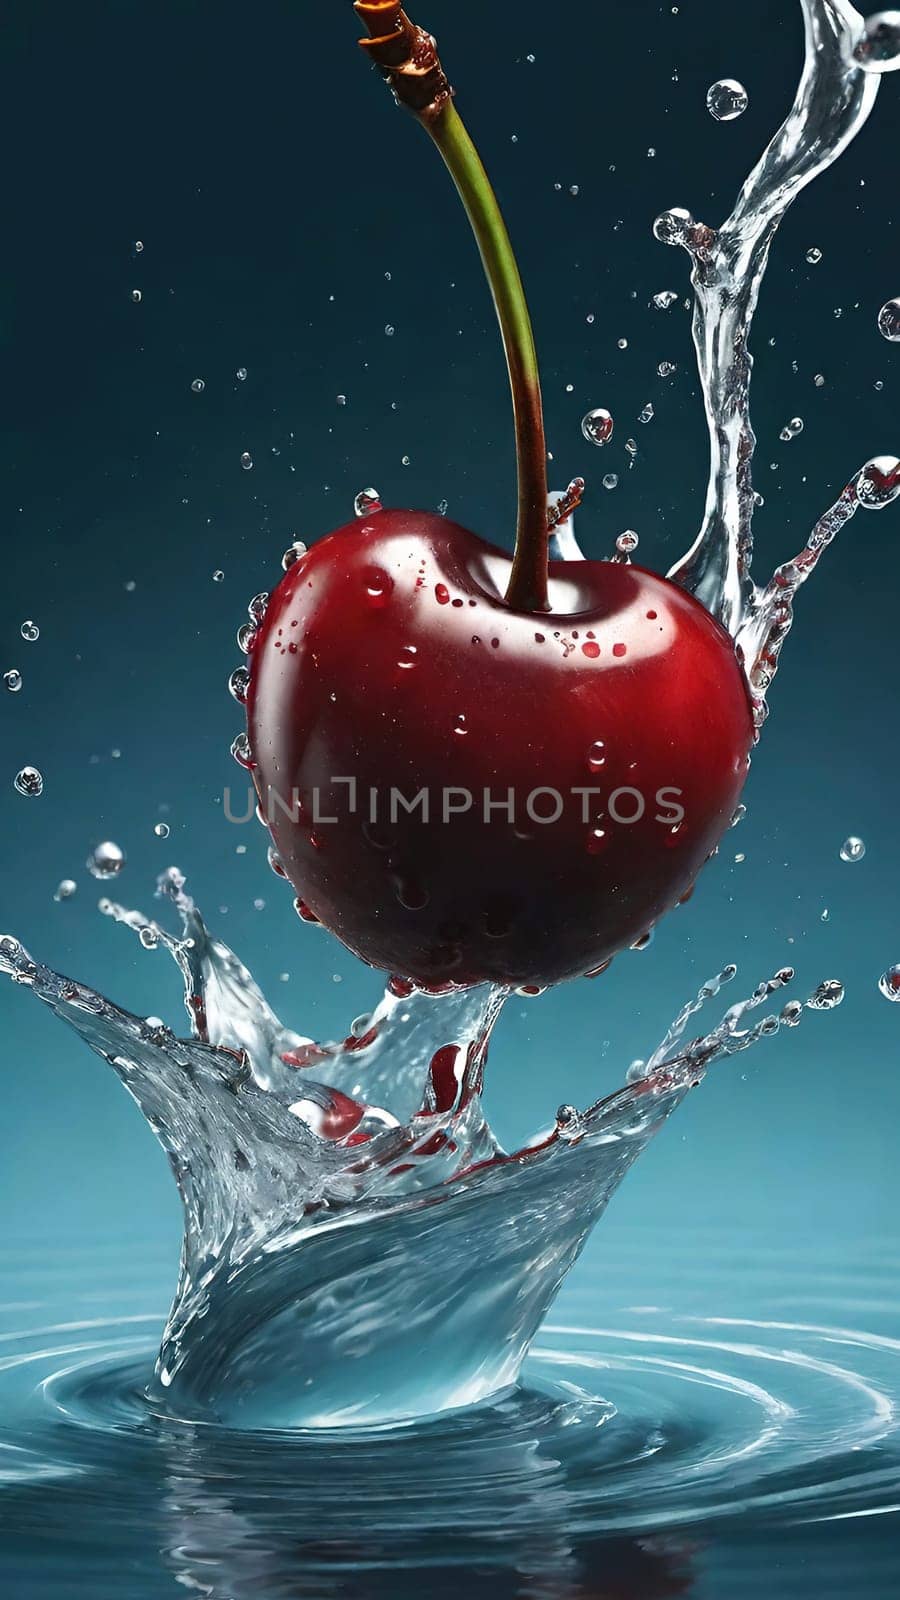 cherry with water splash isolated on background. by yilmazsavaskandag